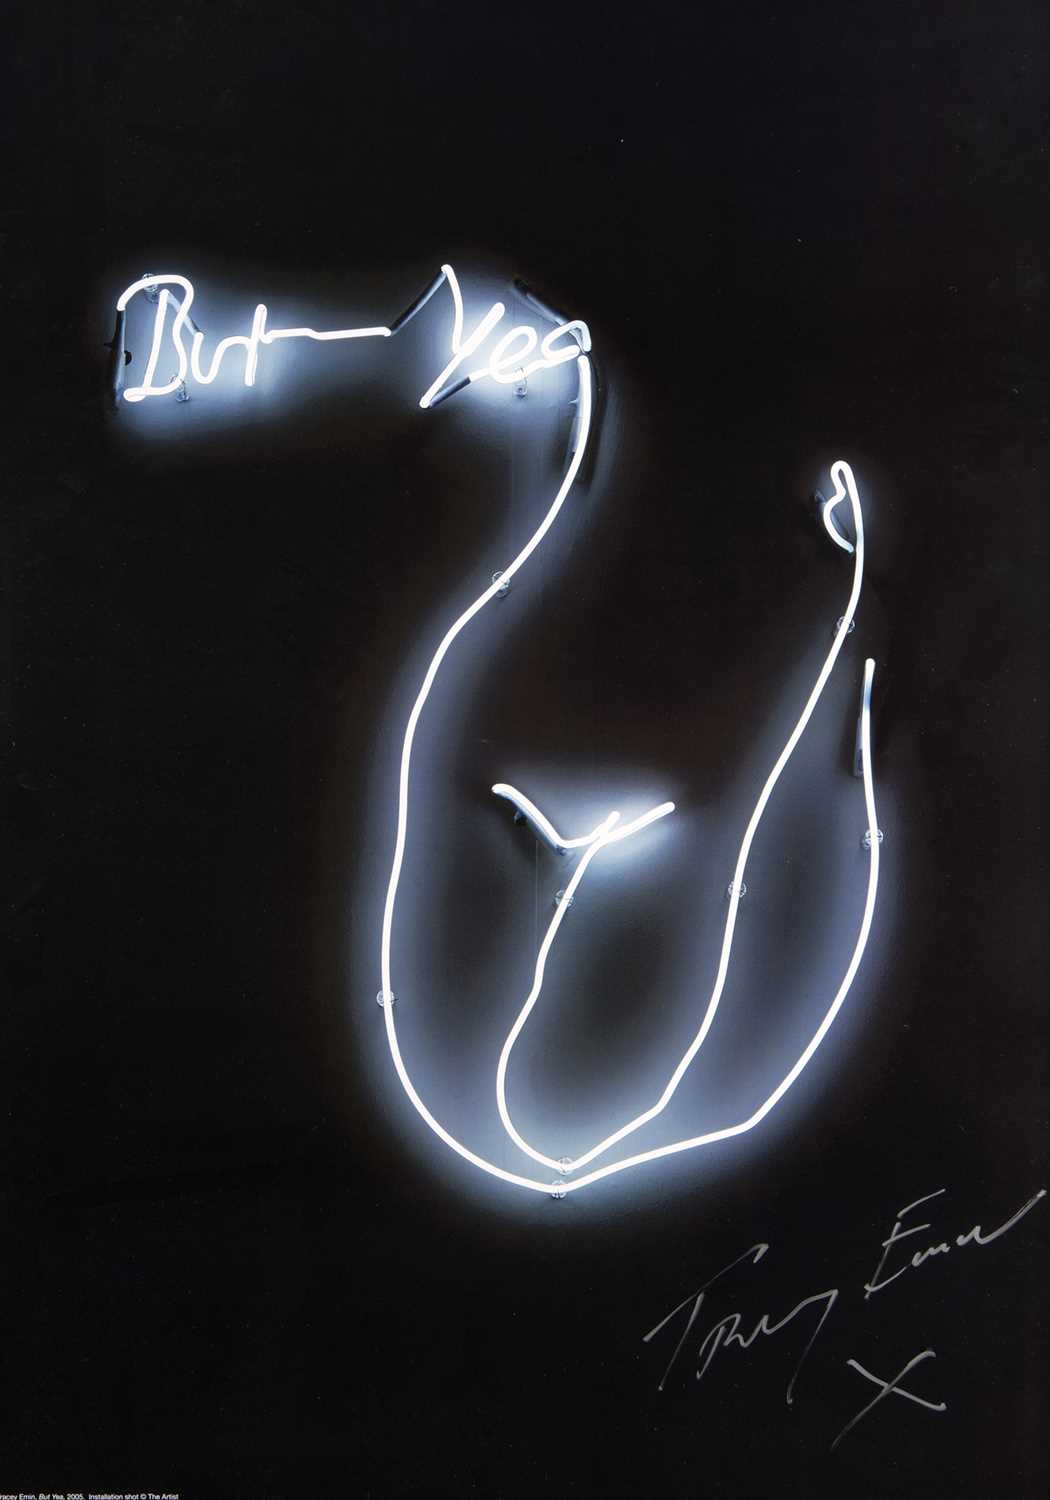 Lot 30 - Tracey Emin (British 1963-), 'But Yea', 2015